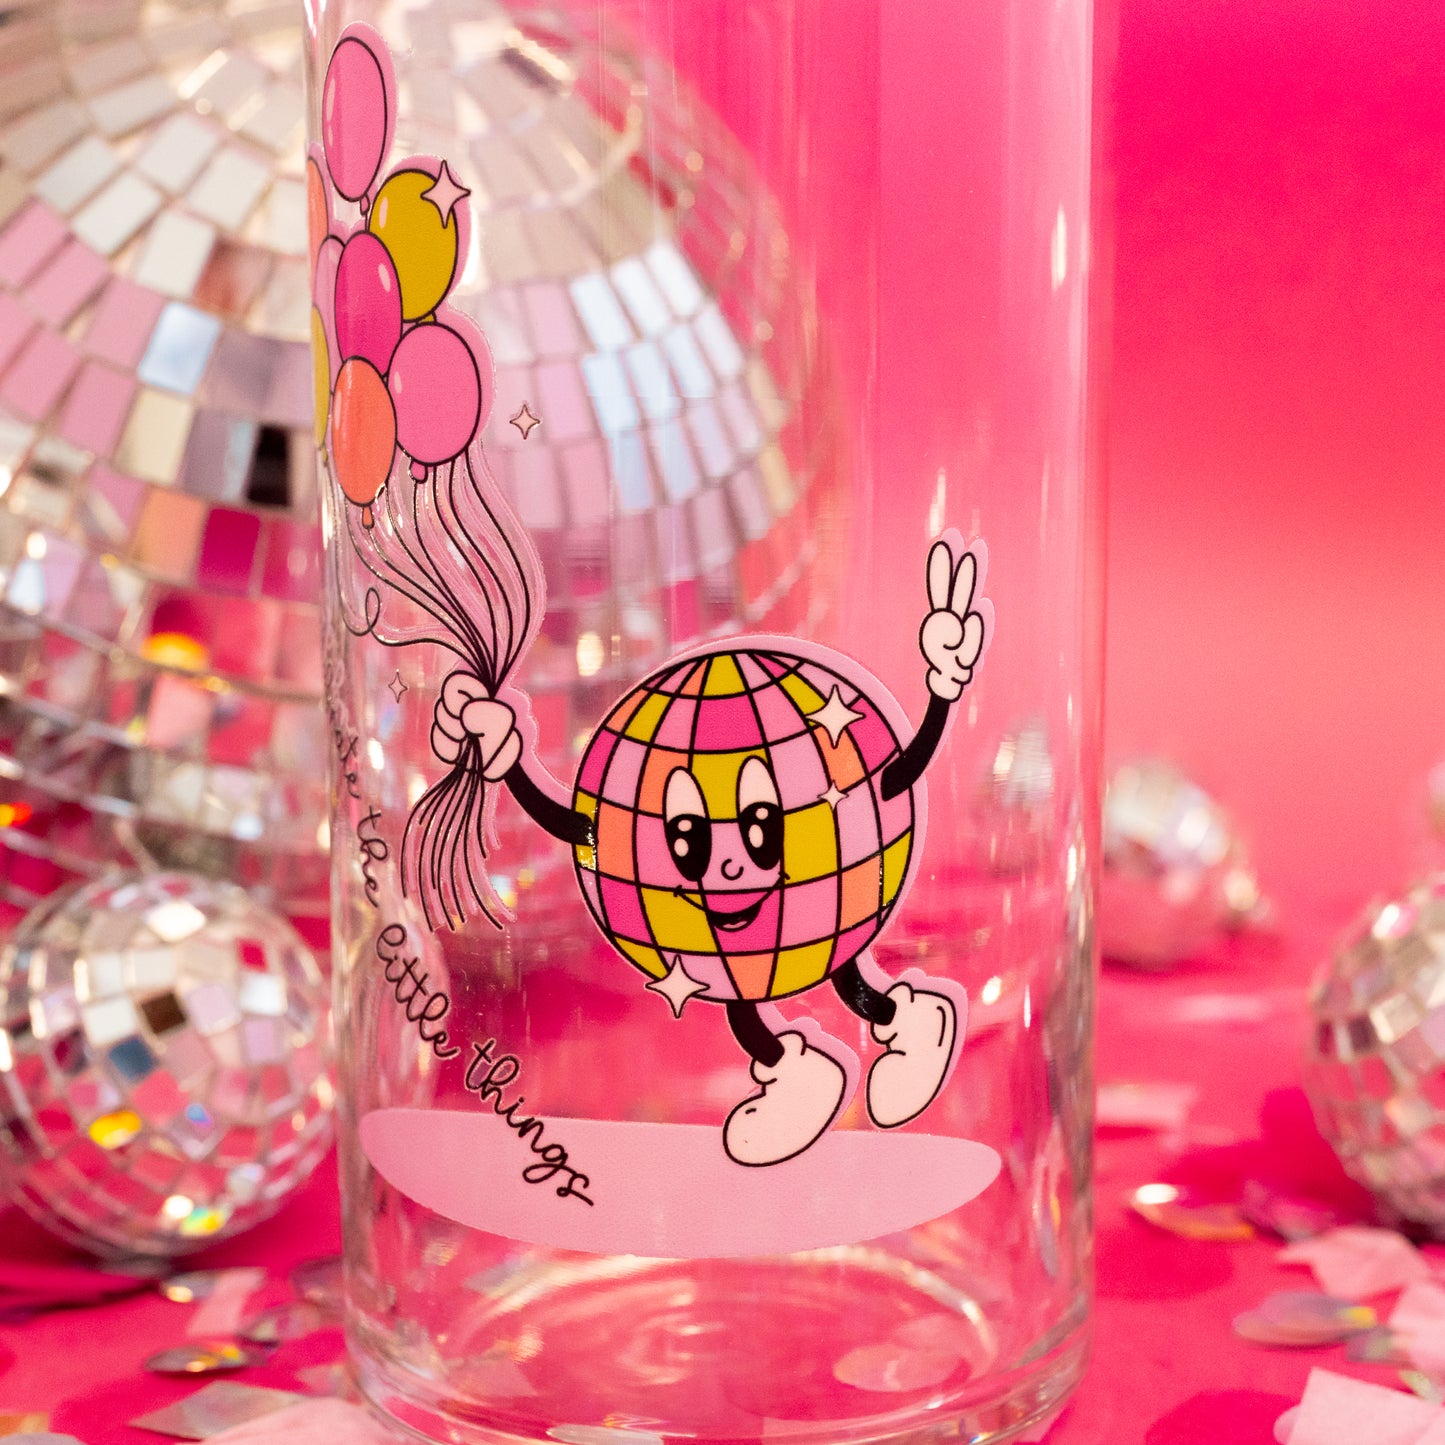 pink, yelllow and orange disco ball cartoon figure